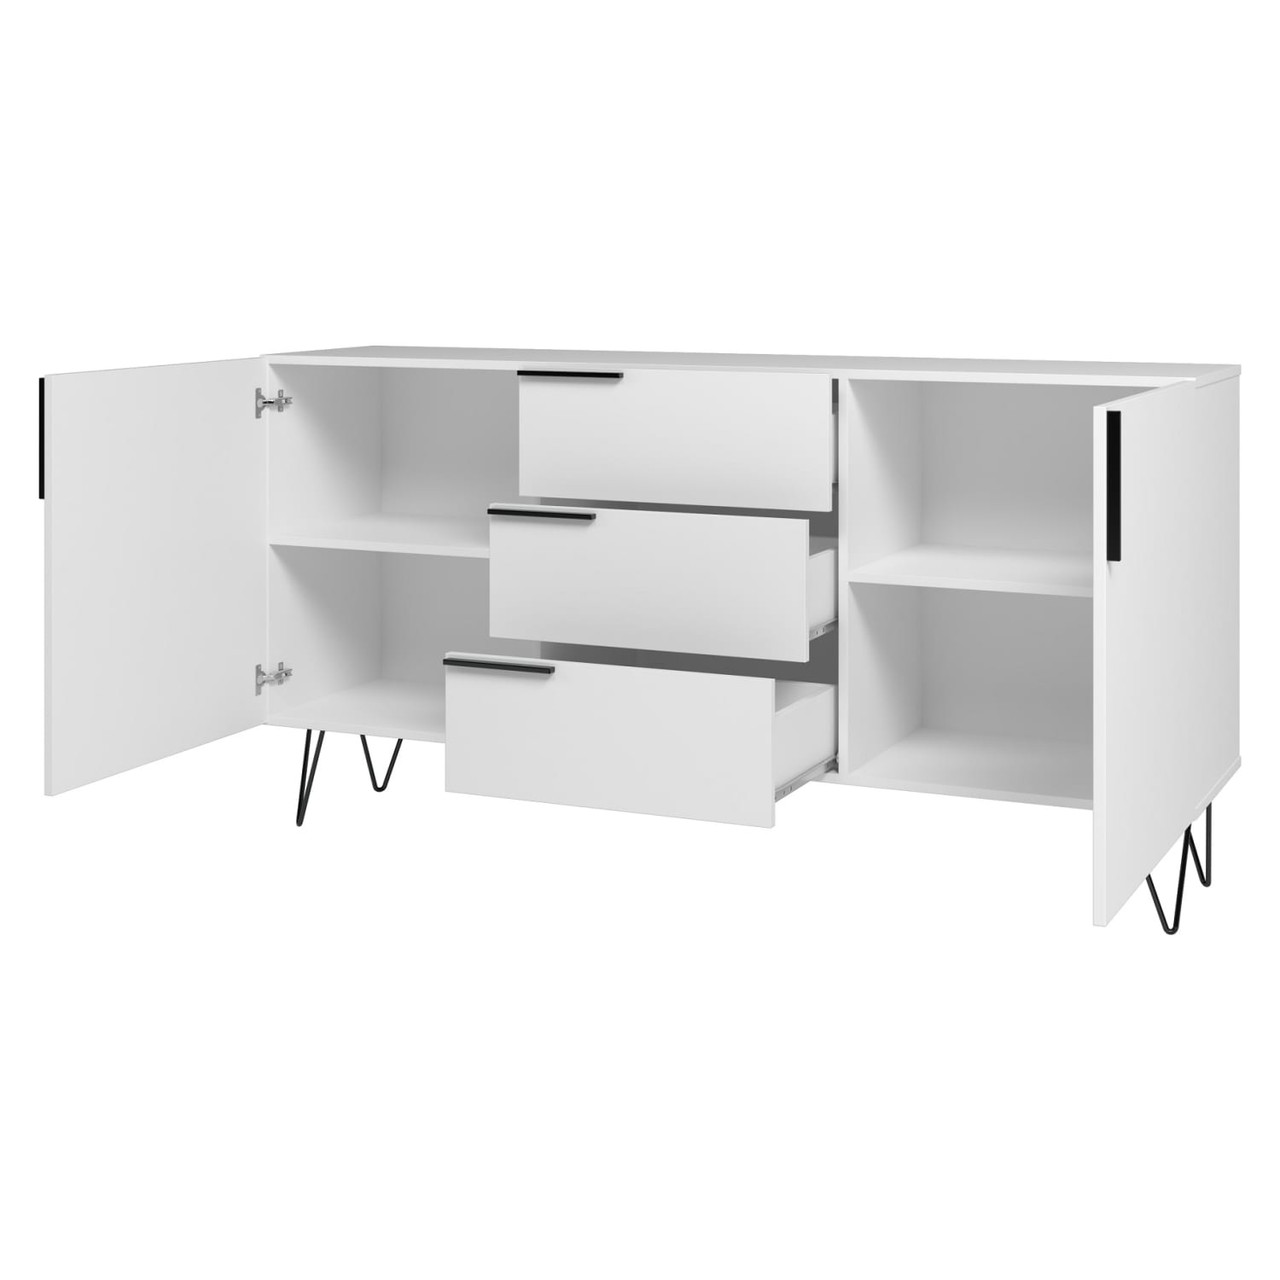 Beekman 62.99” Sideboard in White